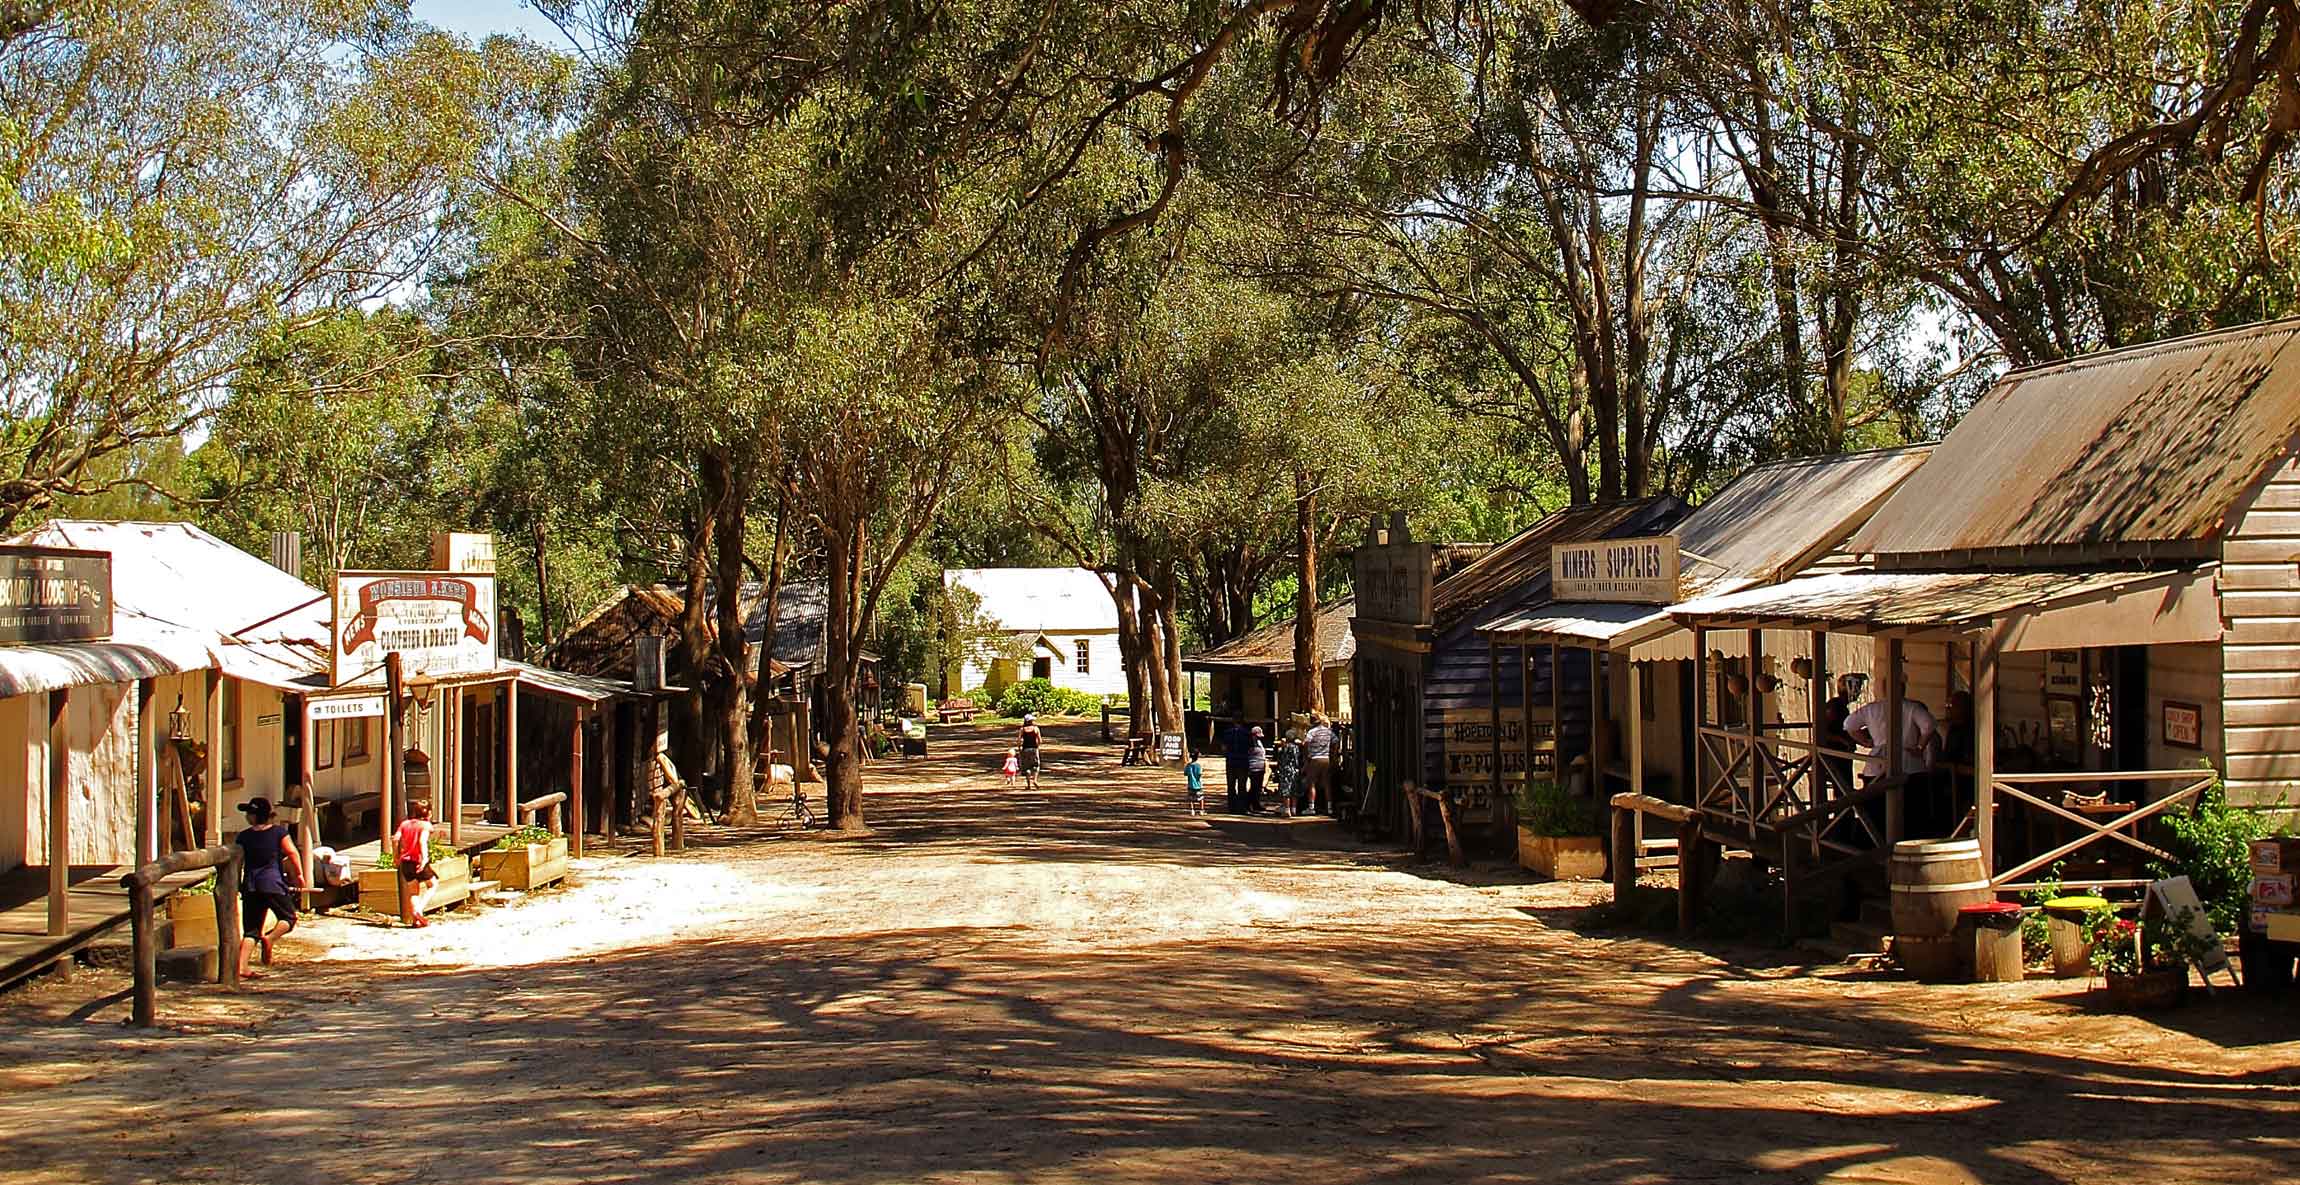 Australiana Pioneer Village the perfect venue for vintage & rustic weddings